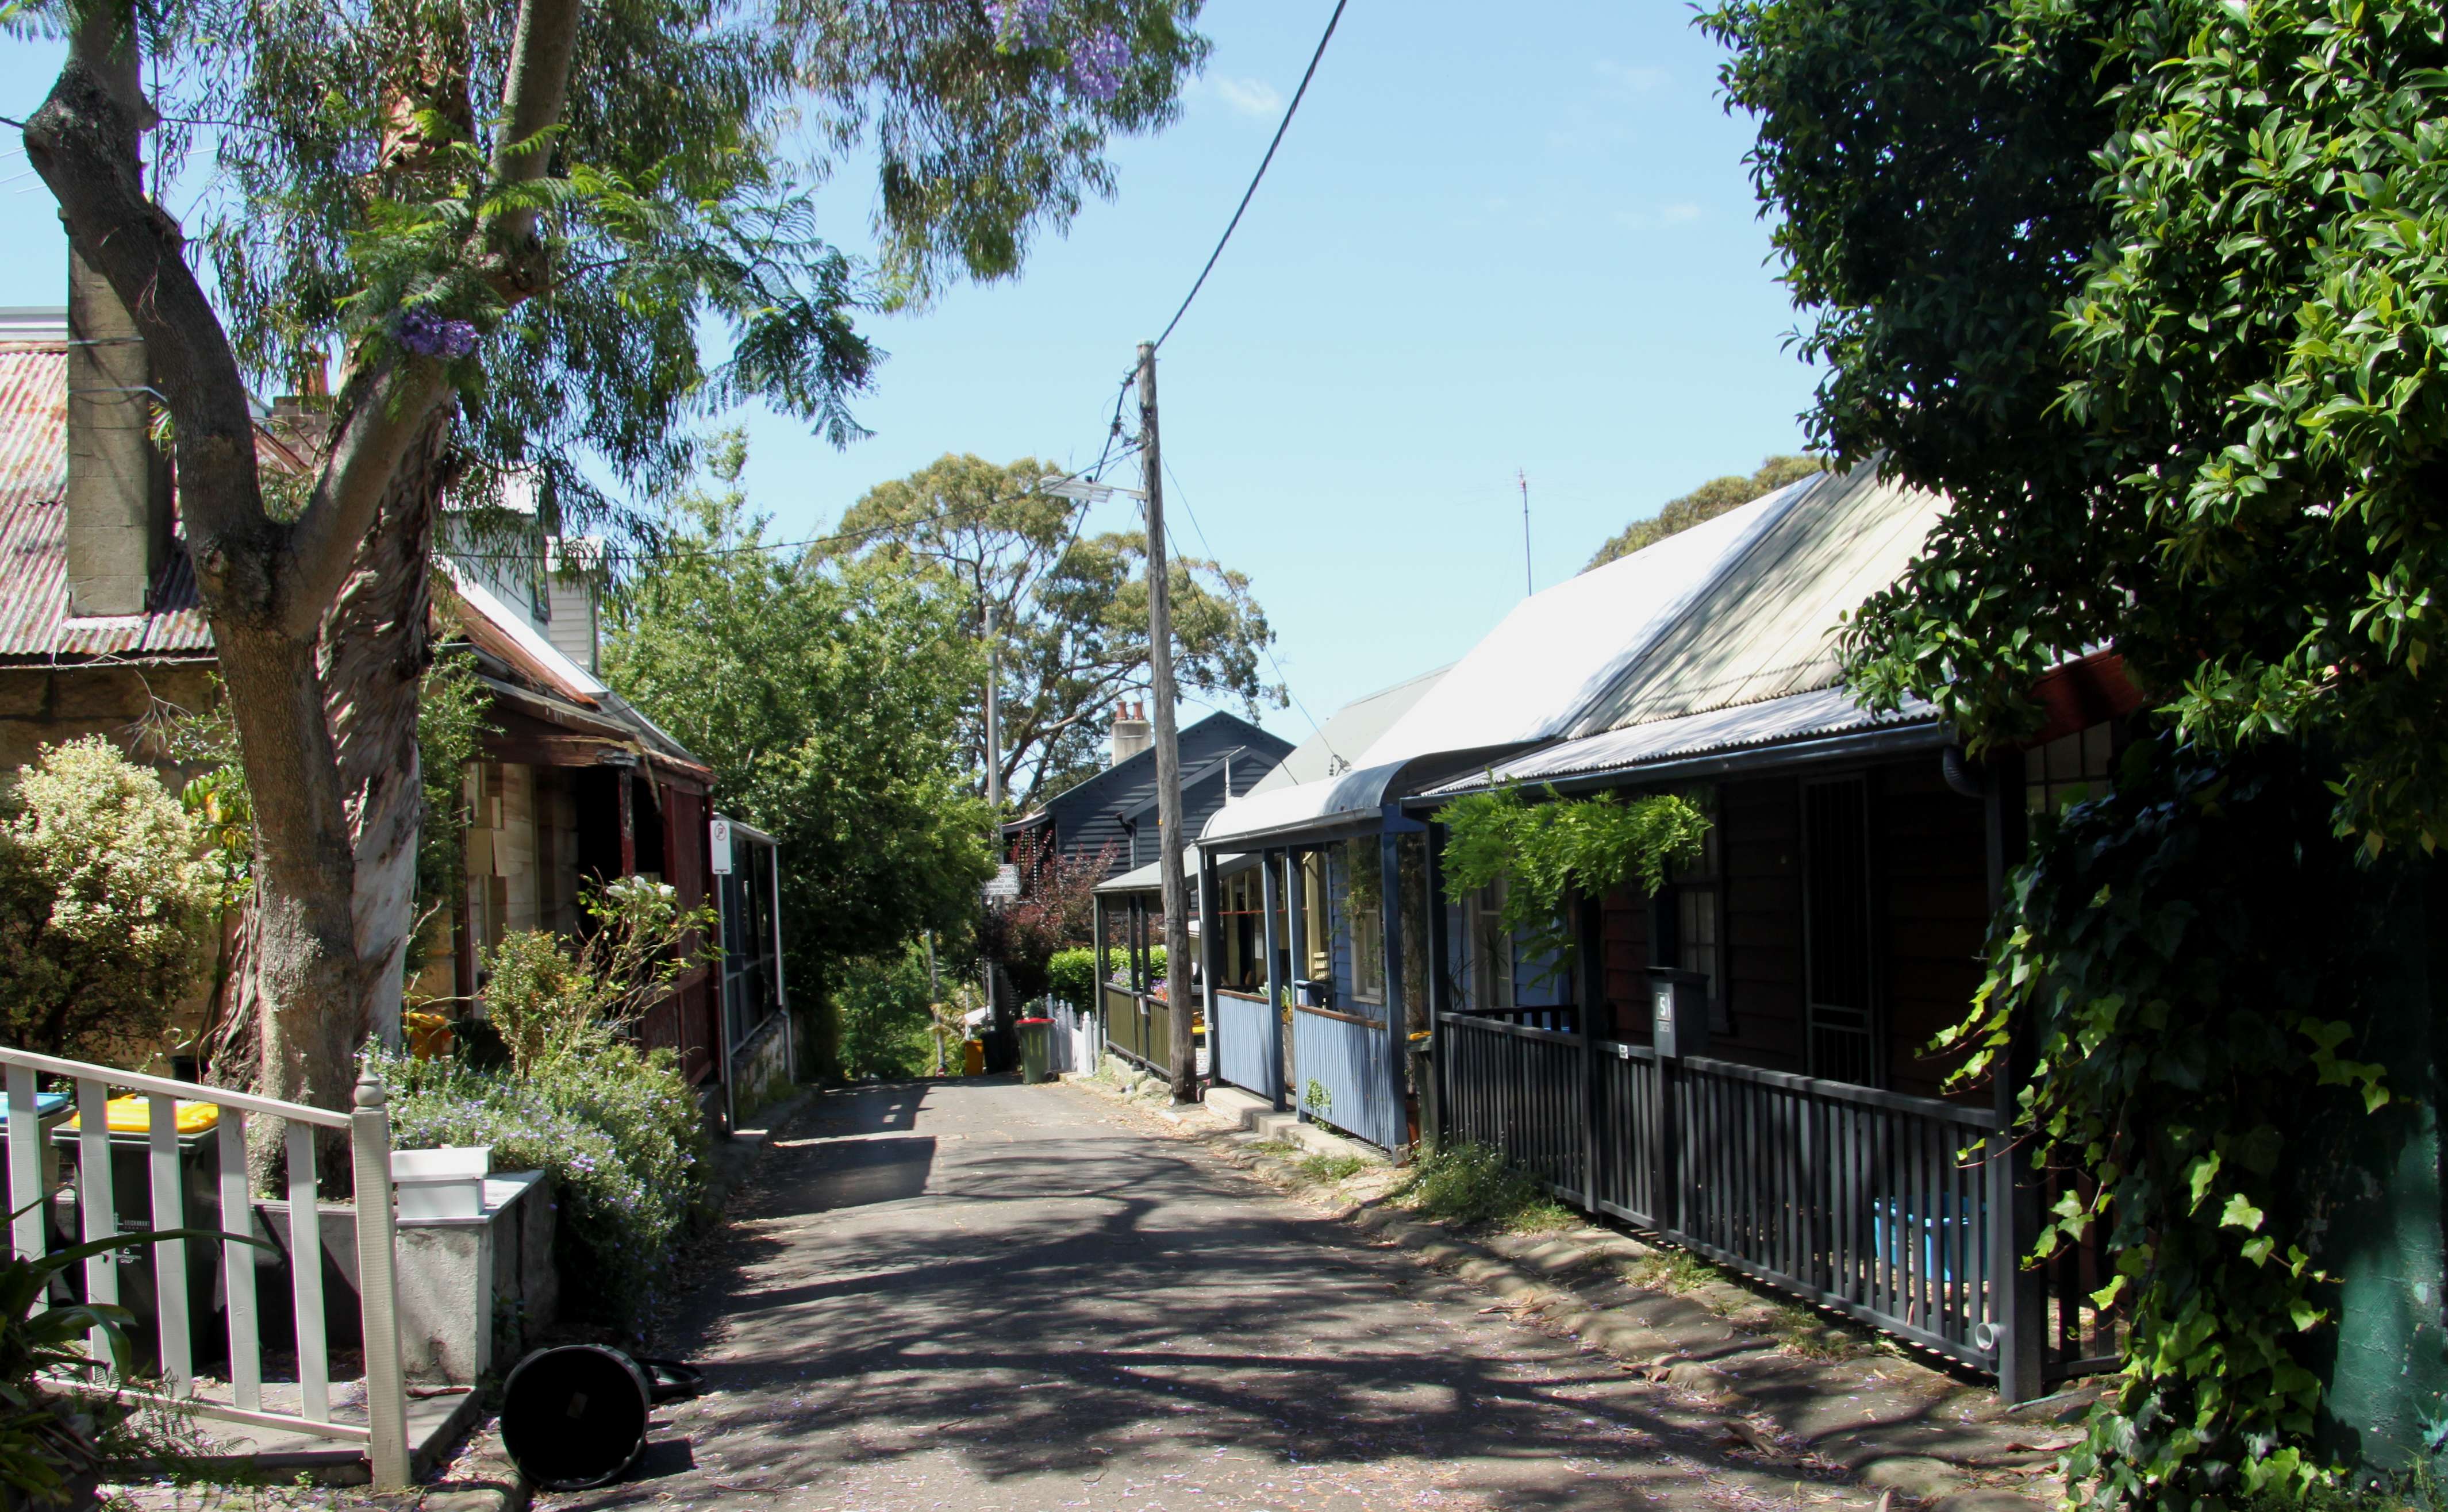 Traditional Australian homes